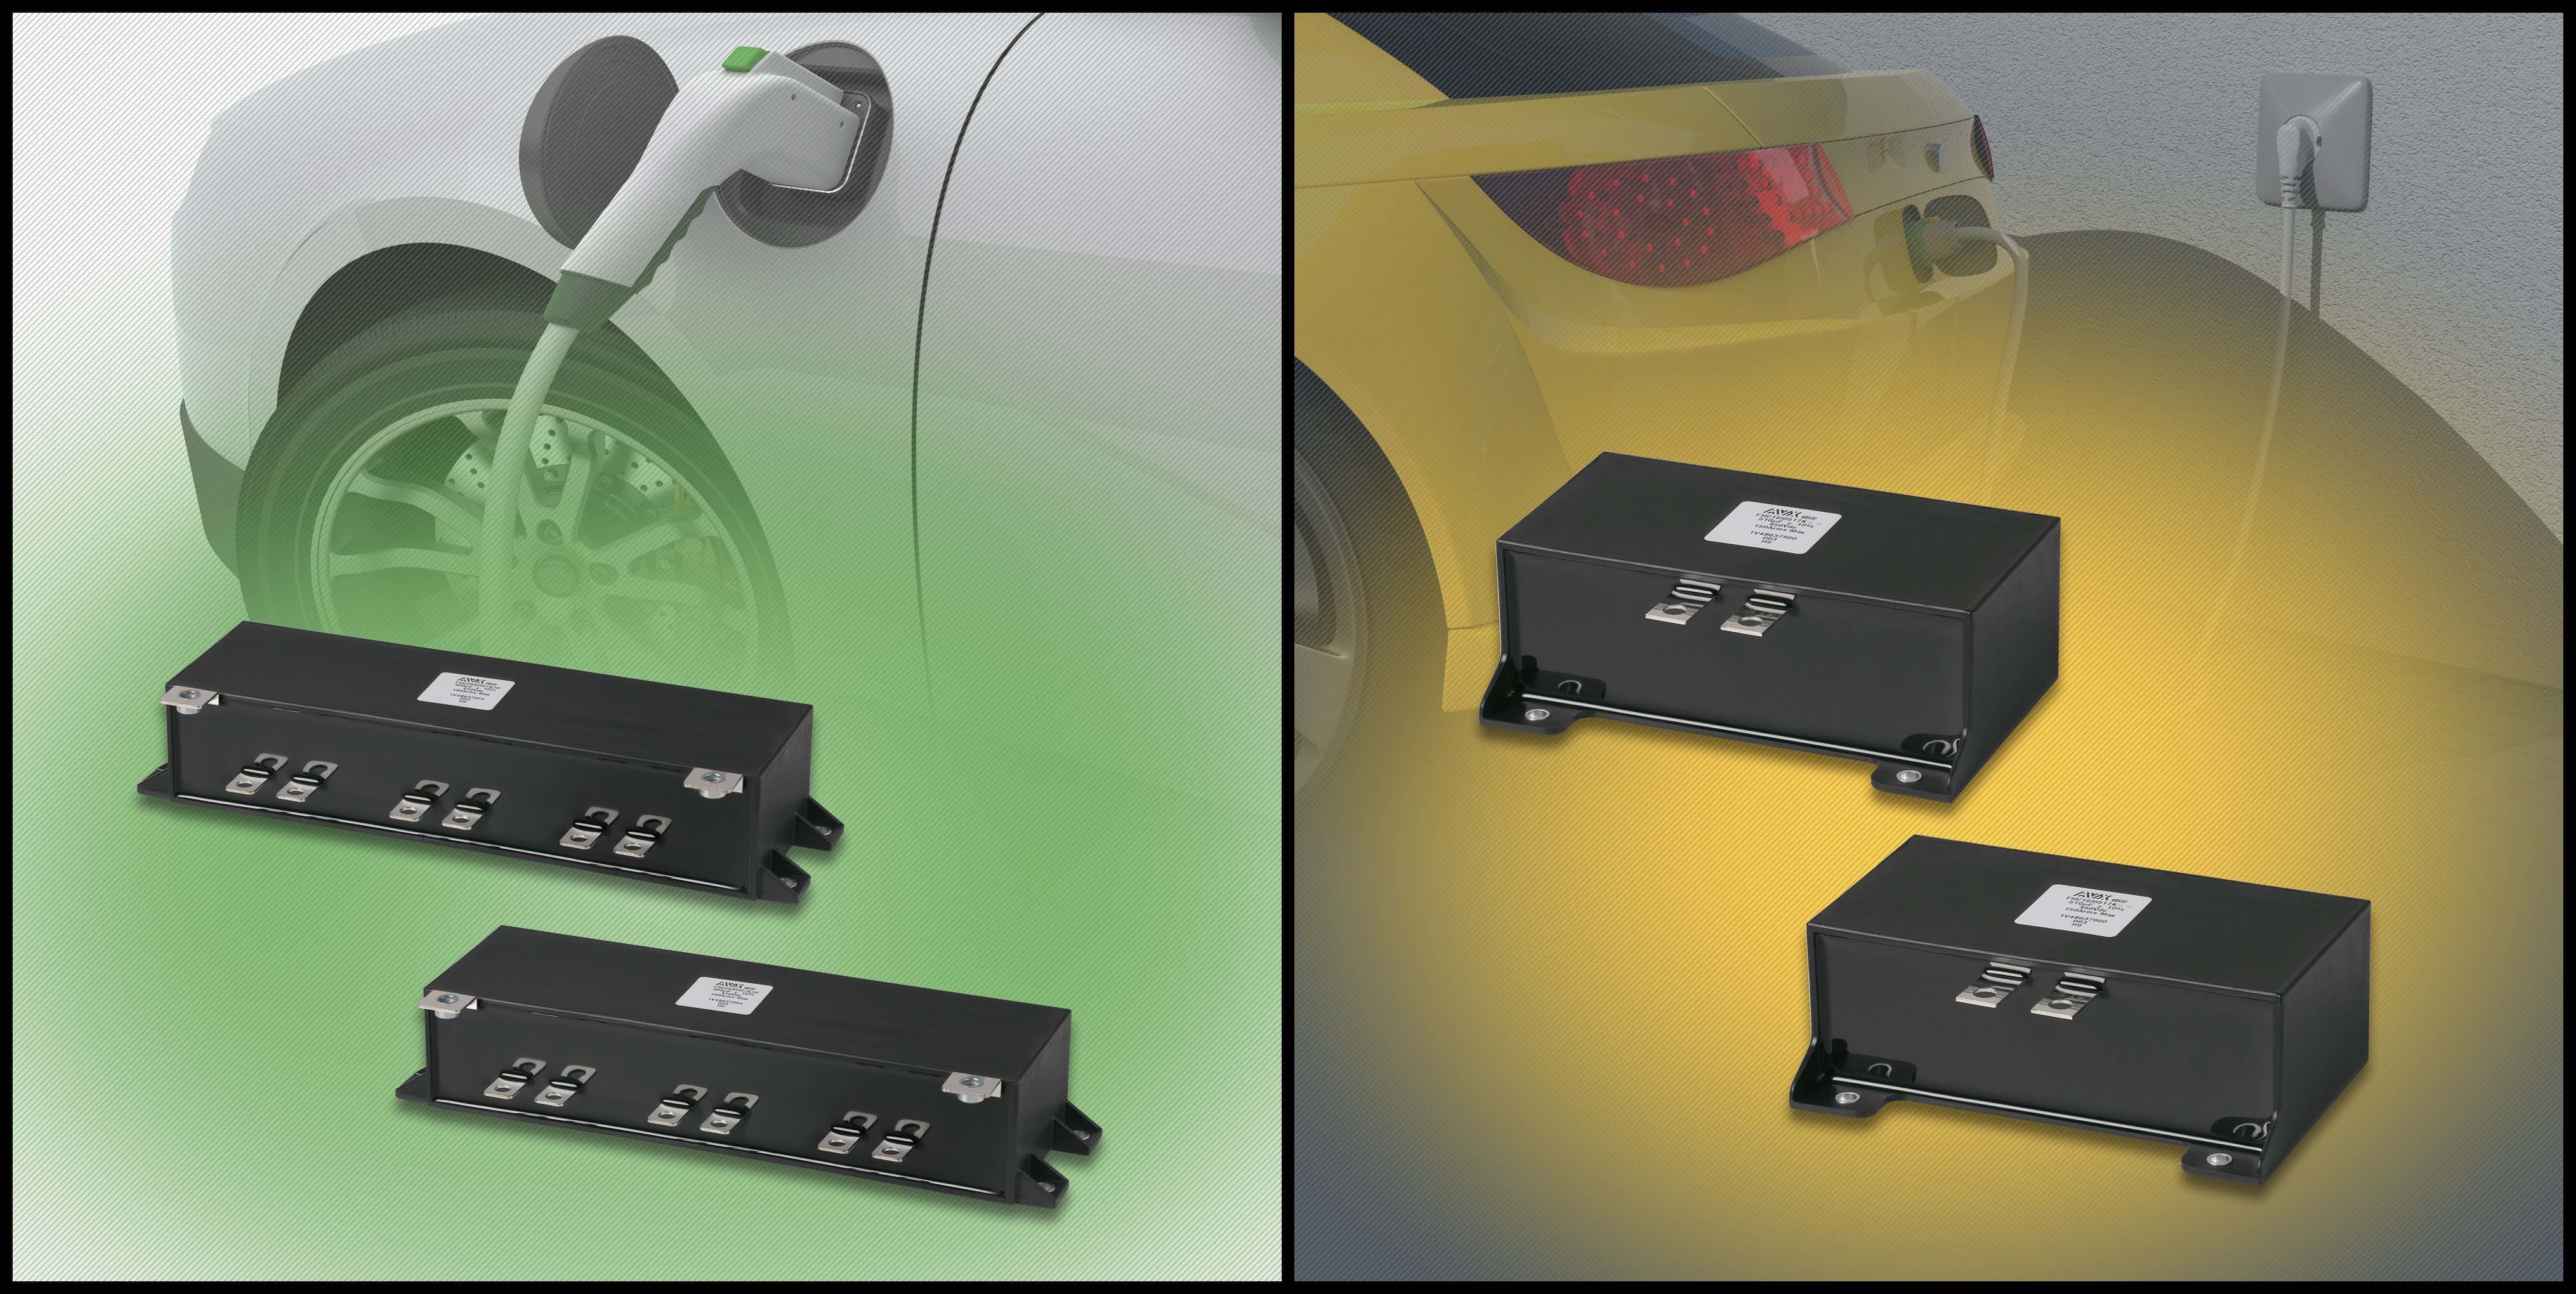 AVX Releases New FHC1 & FHC2 Series Power Film Capacitors for EV/HEV Applications